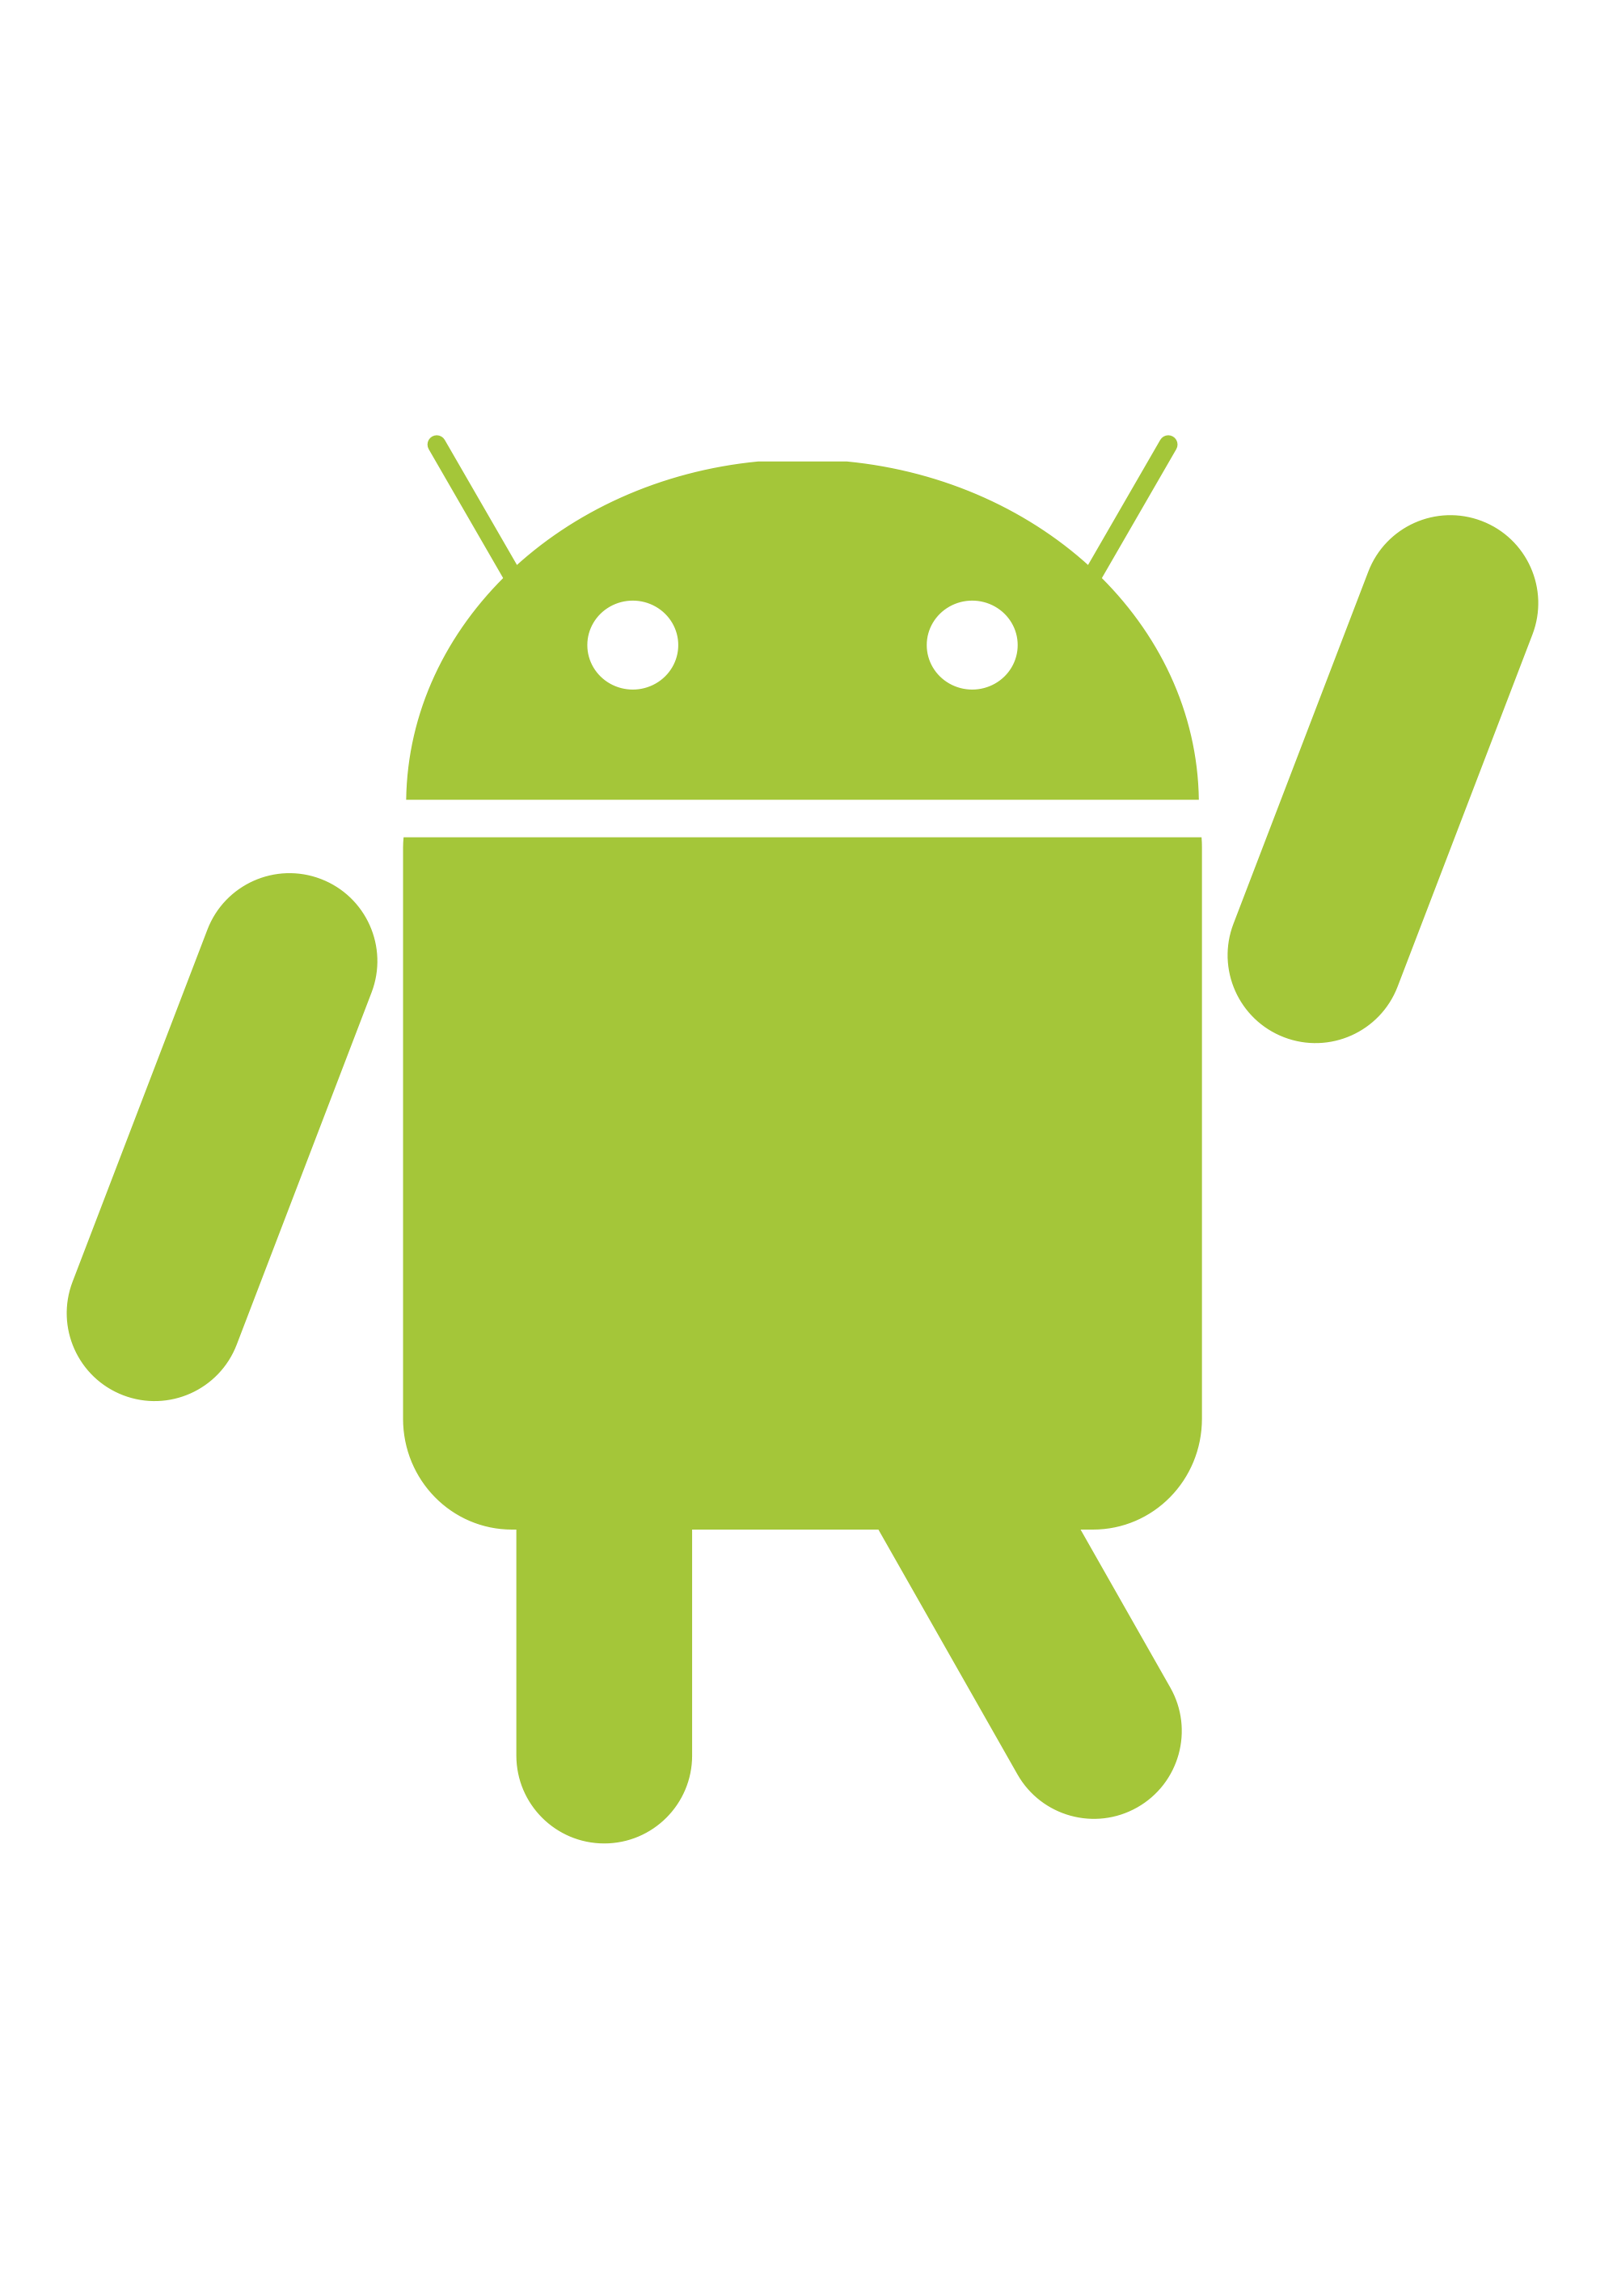 Android PNG Transparent Image - PngPix